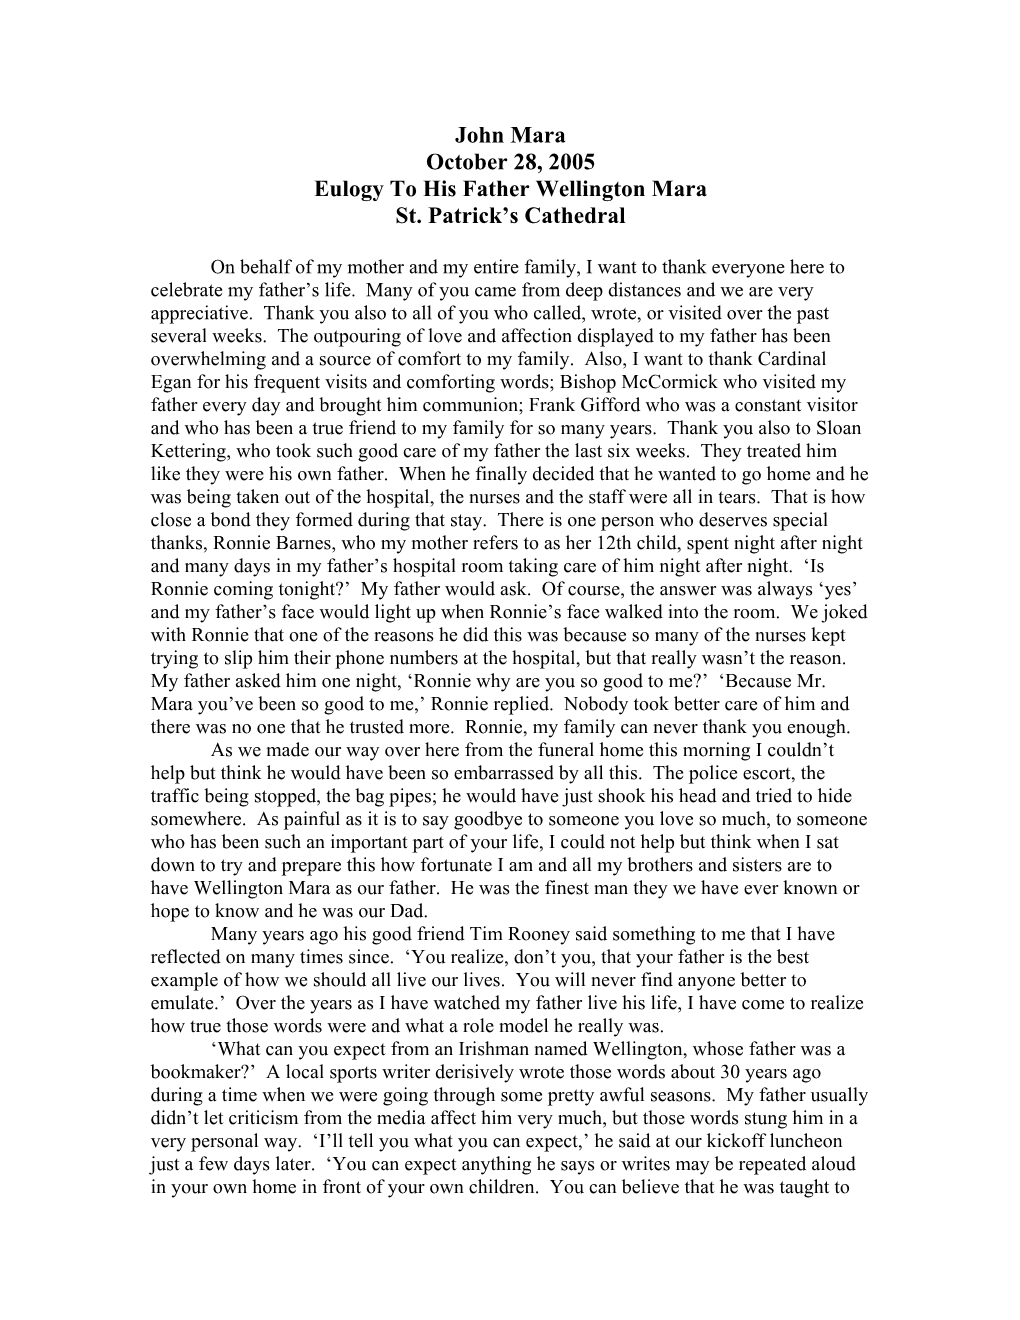 John Mara October 28, 2005 Eulogy to His Father Wellington Mara St. Patrick's Cathedral